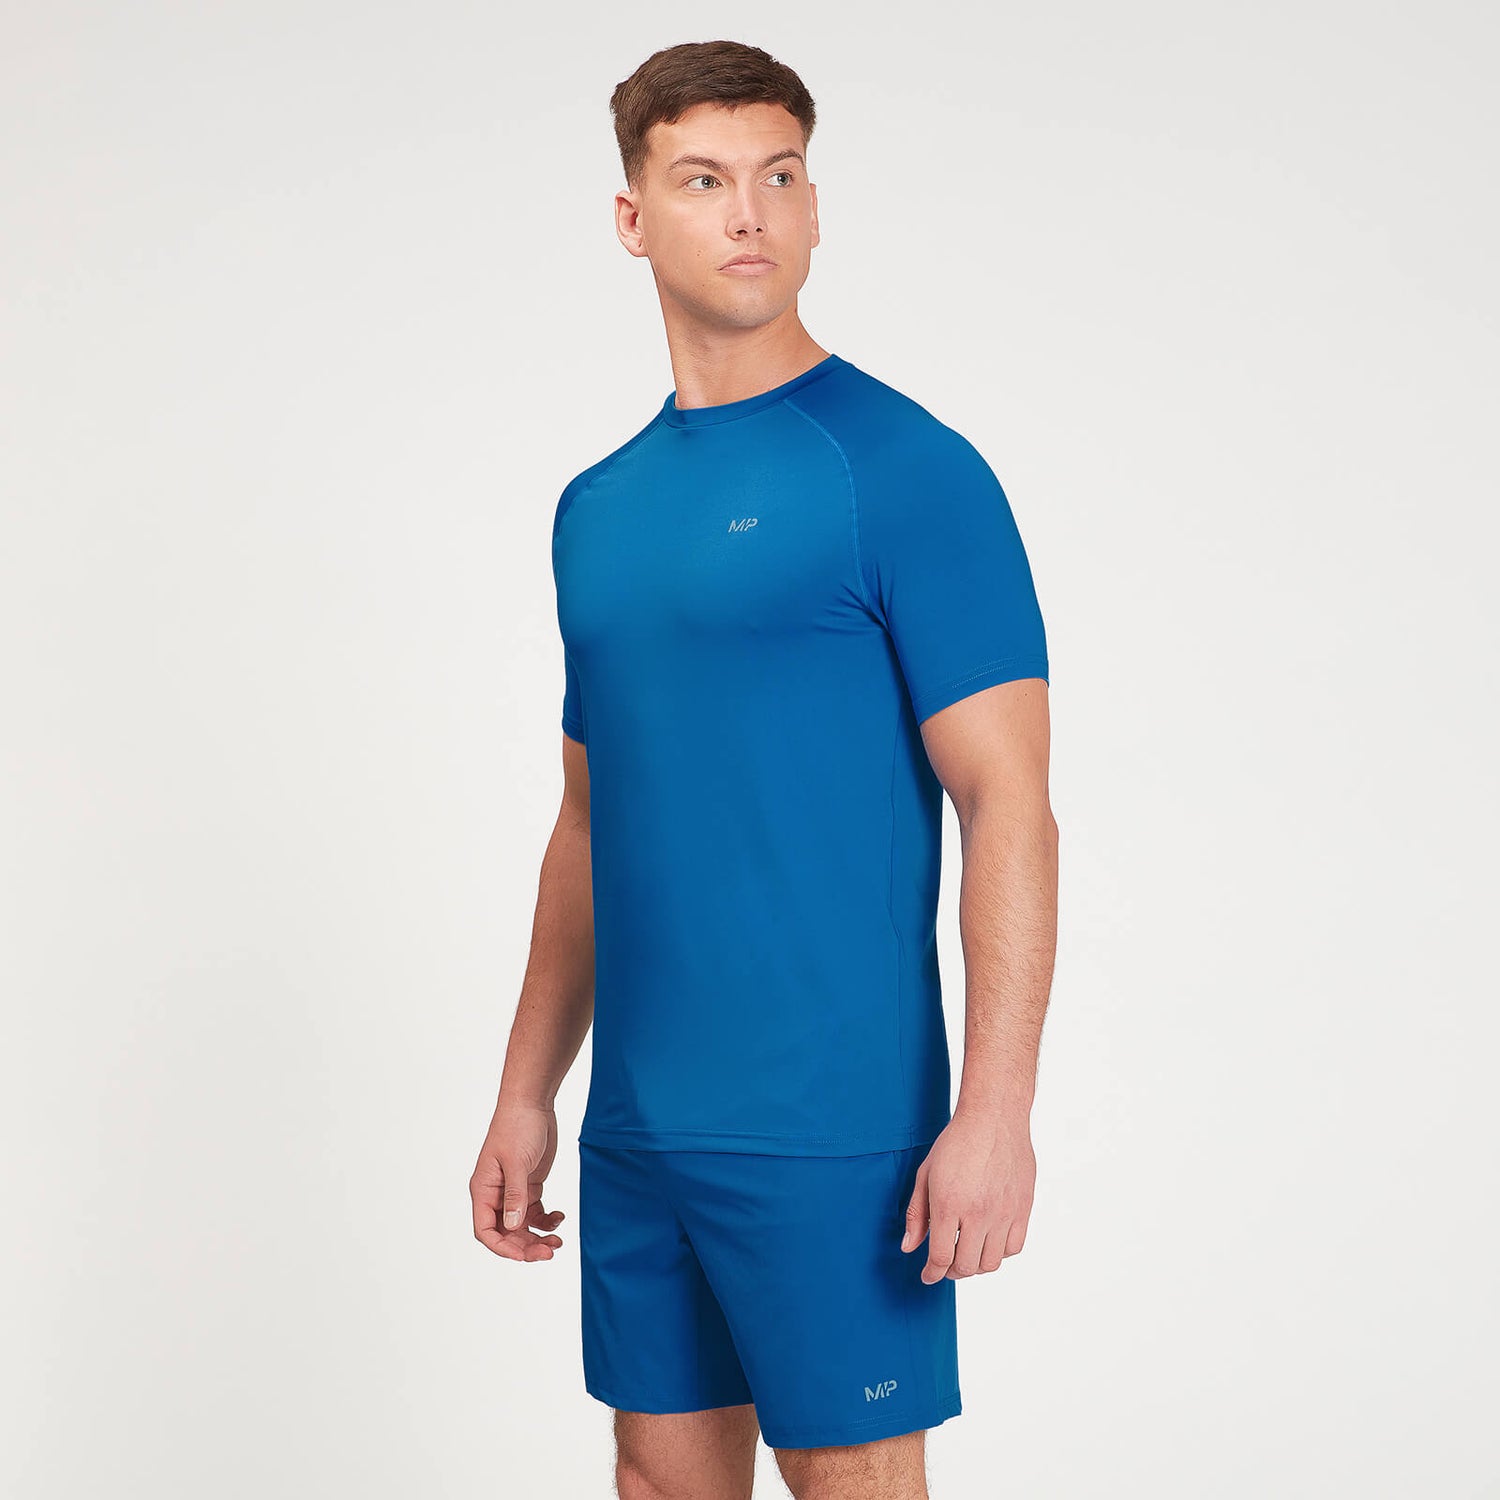 MP Men's Graphic Running Short Sleeve T-Shirt - True Blue